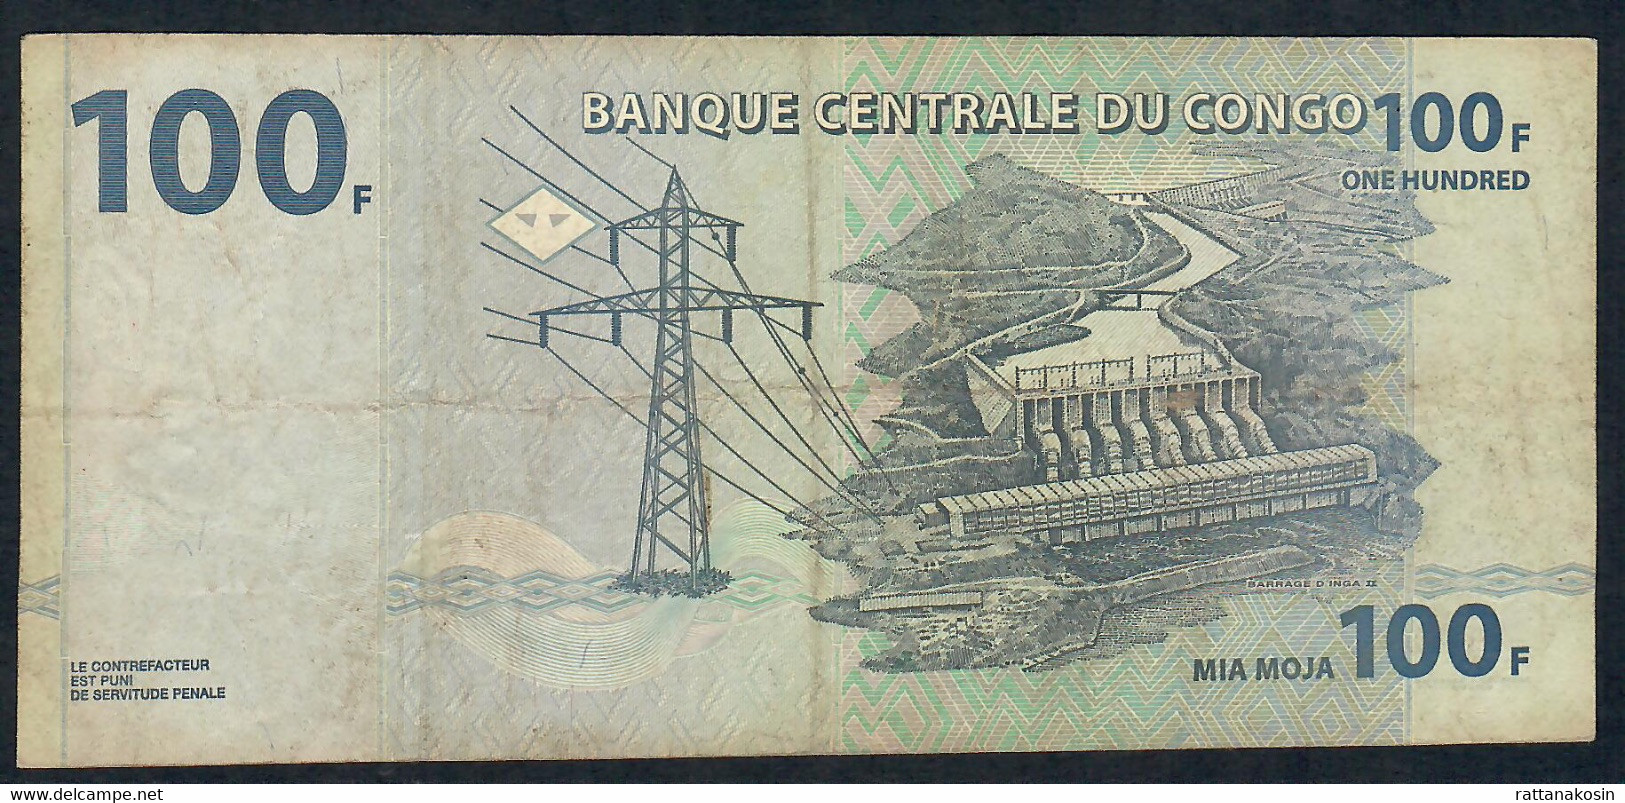 CONGO C.D.R. P98a 100 FRANCS 2007 Printer G & D ,Munich VF NO P.h. - Democratische Republiek Congo & Zaire